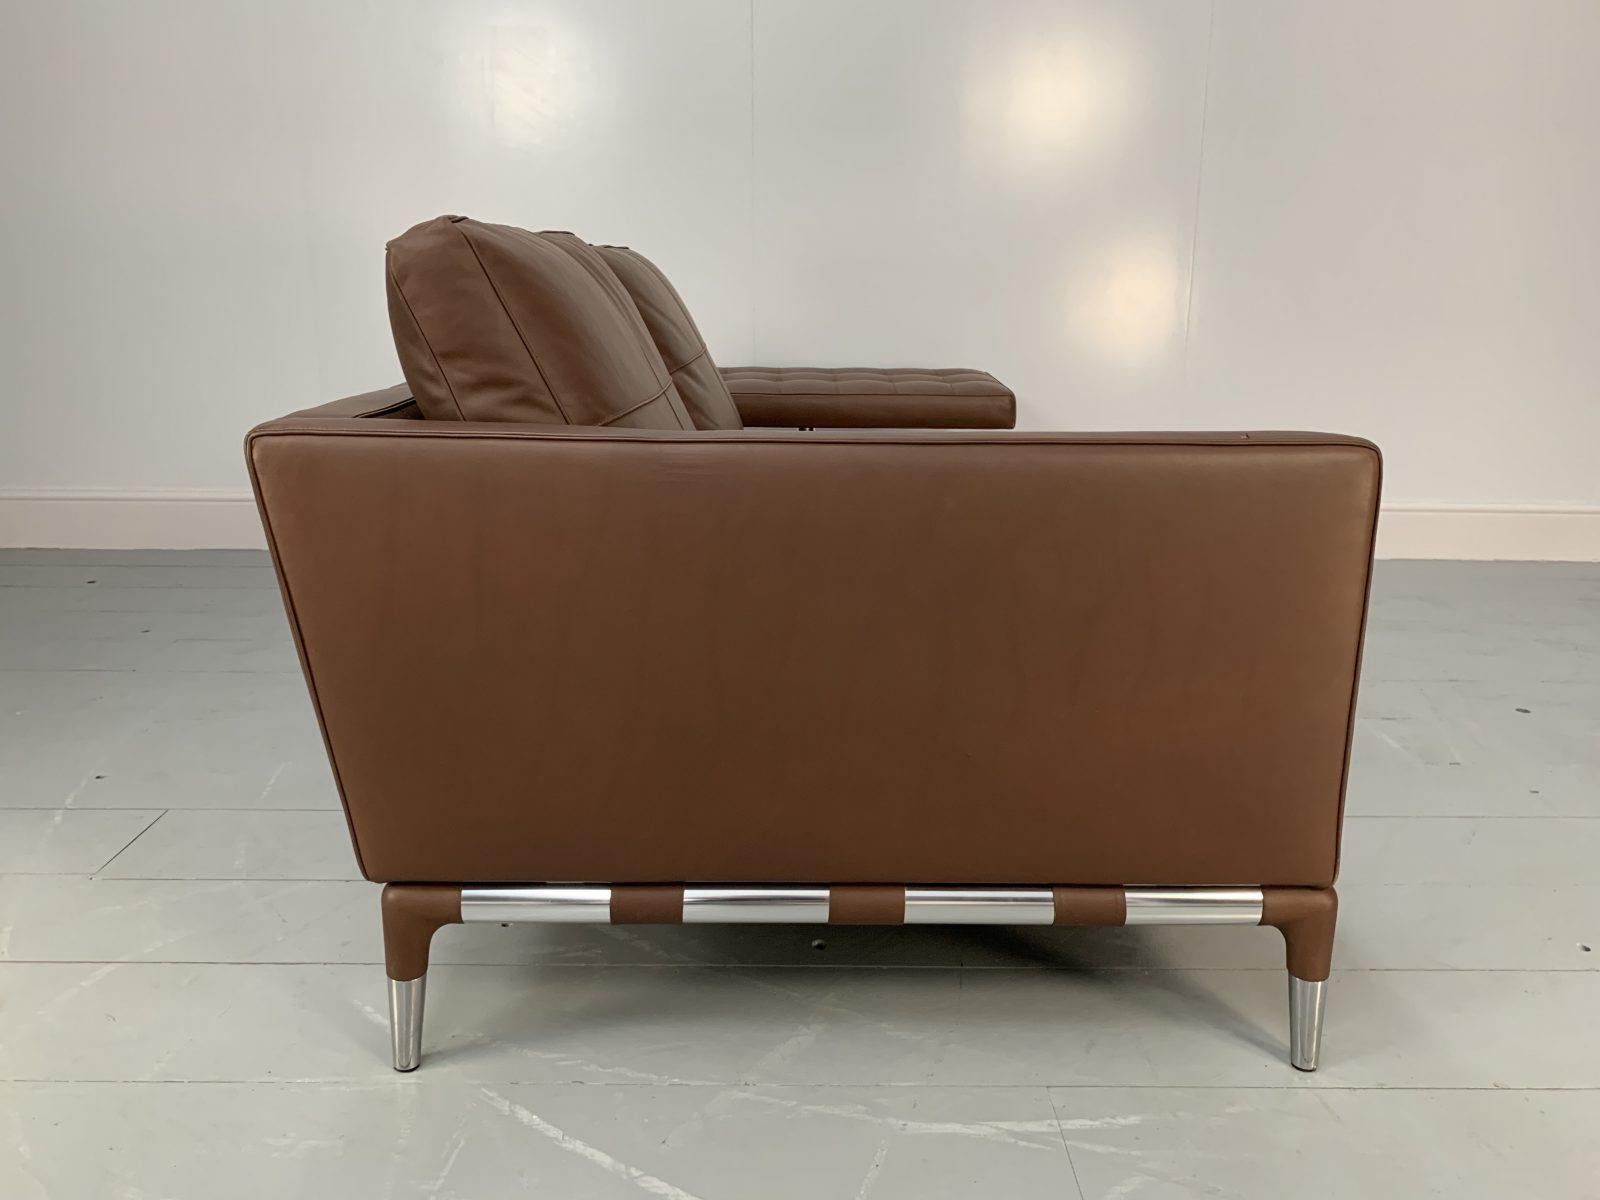 Cassina “241 Prive Divano” Sofa – in Mid-Brown “Pelle” Leather In Good Condition In Barrowford, GB